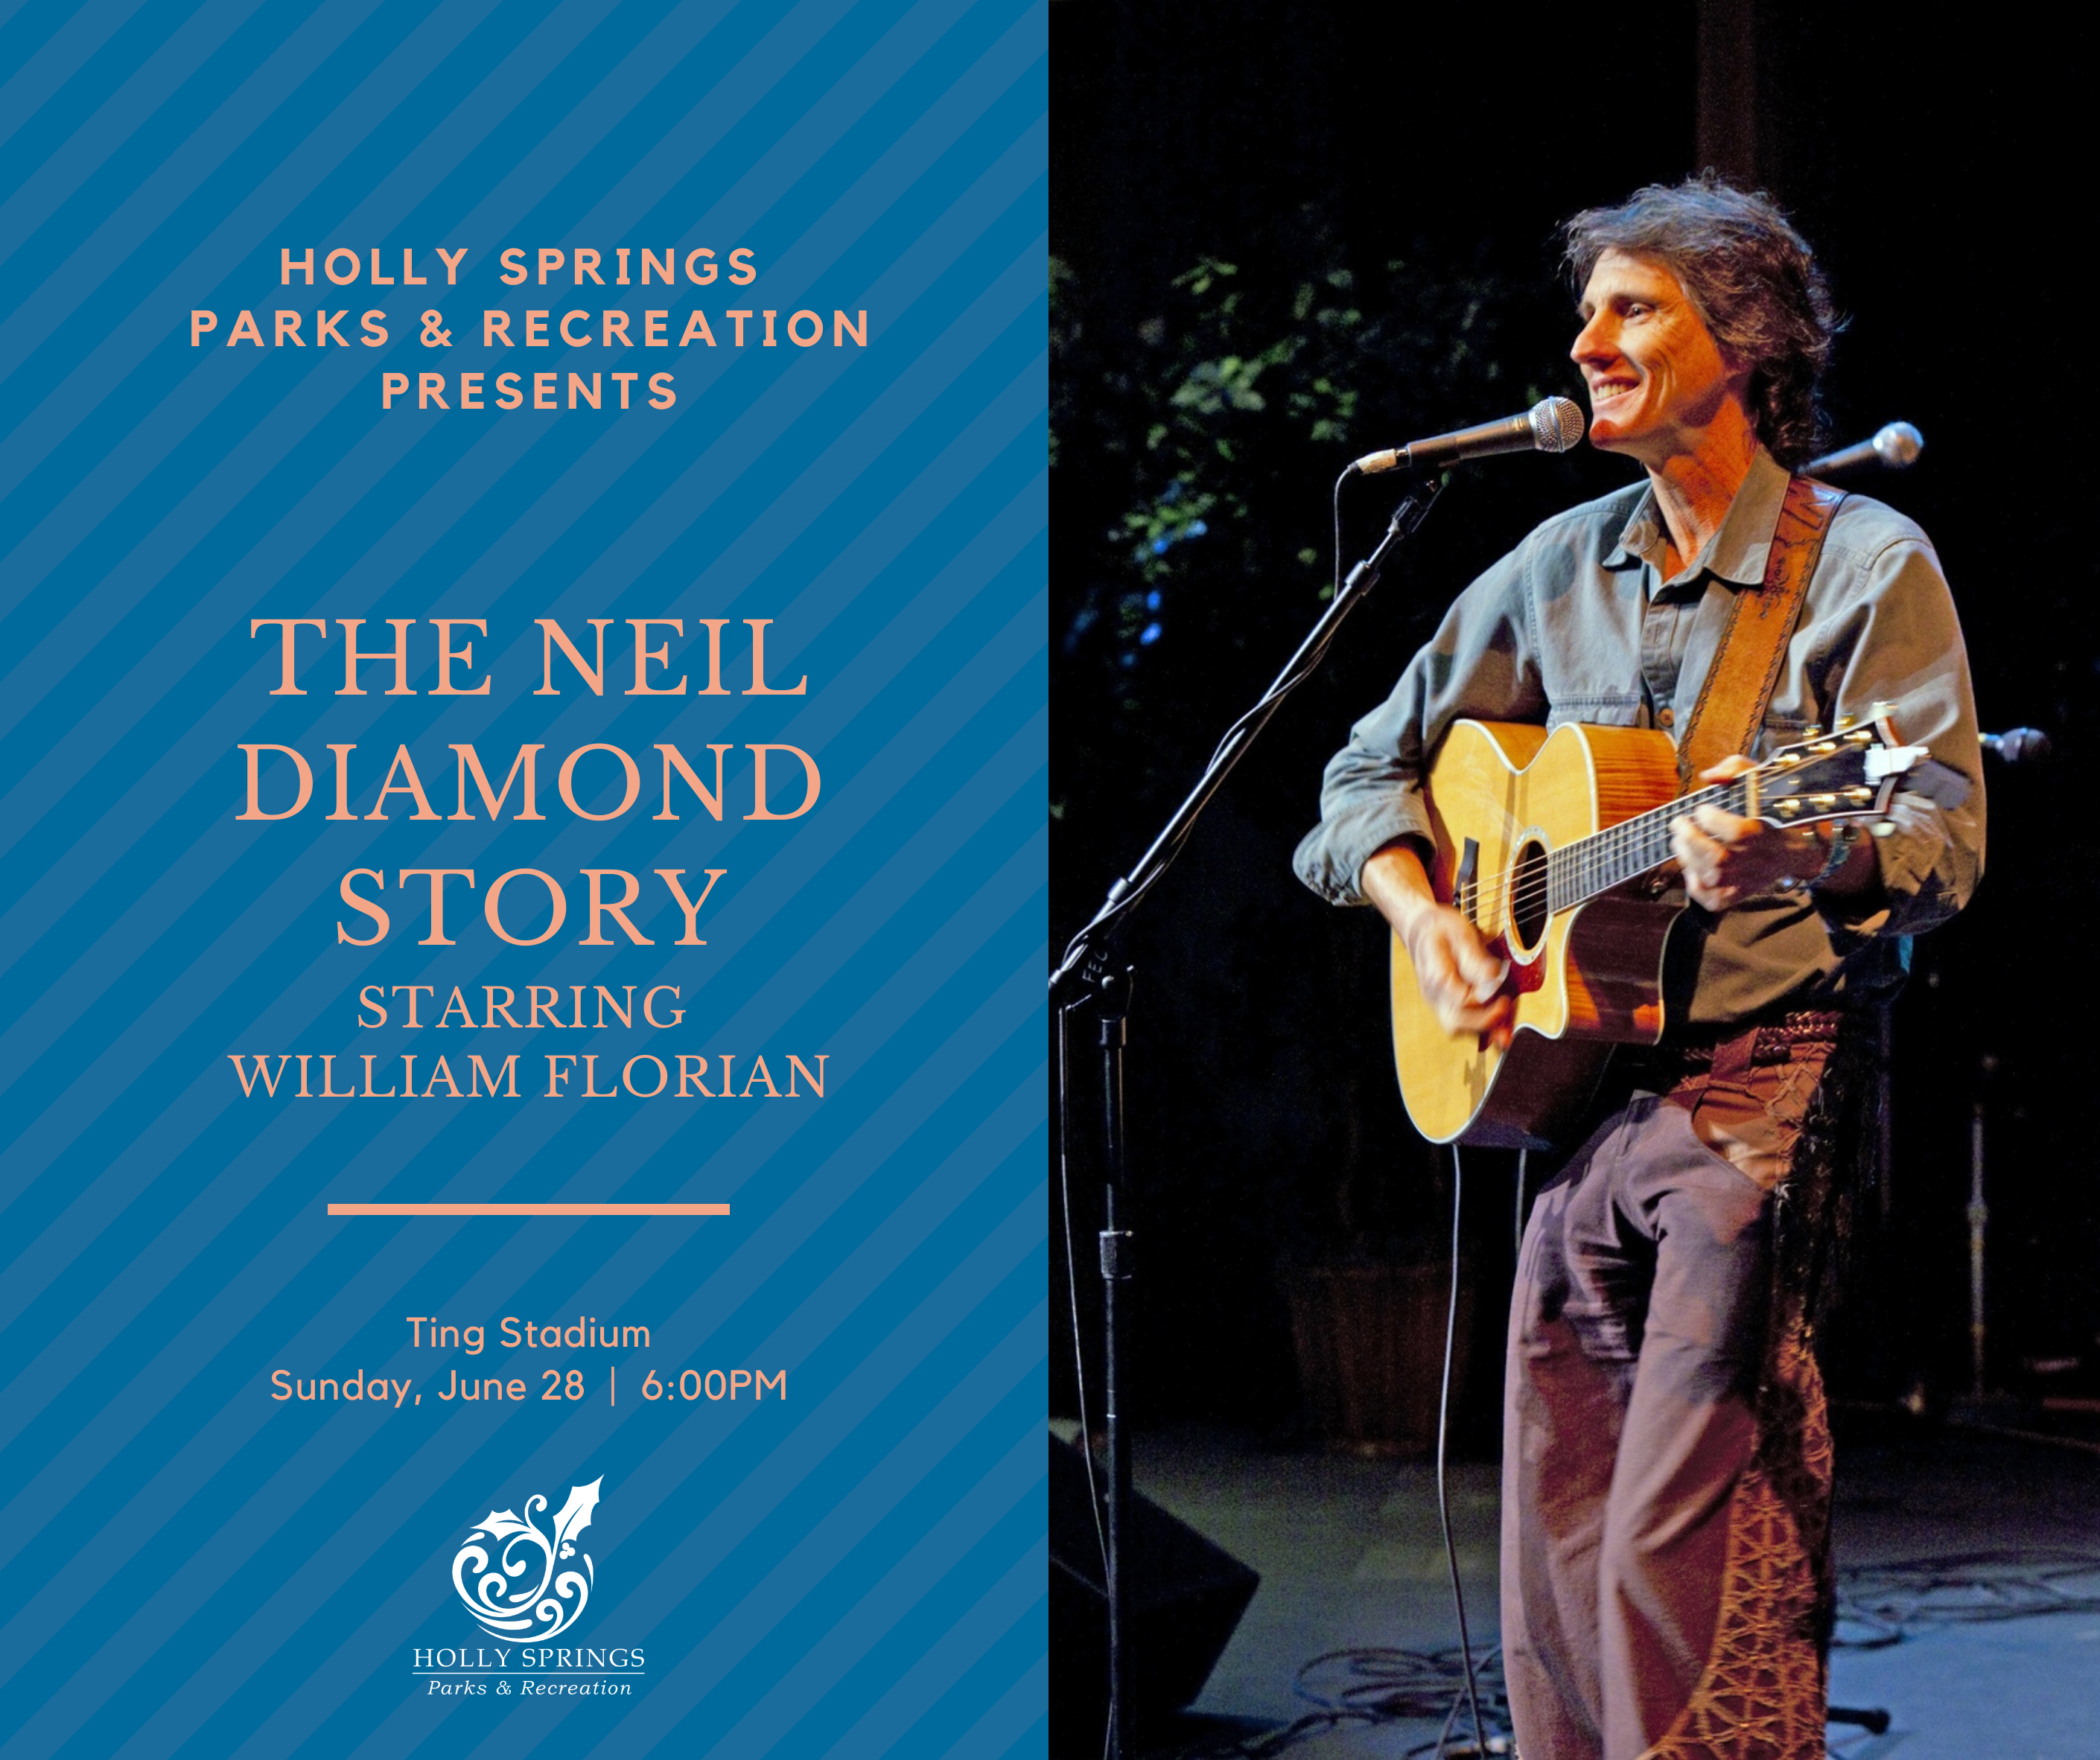 The Neil Diamond Story starring William Florian